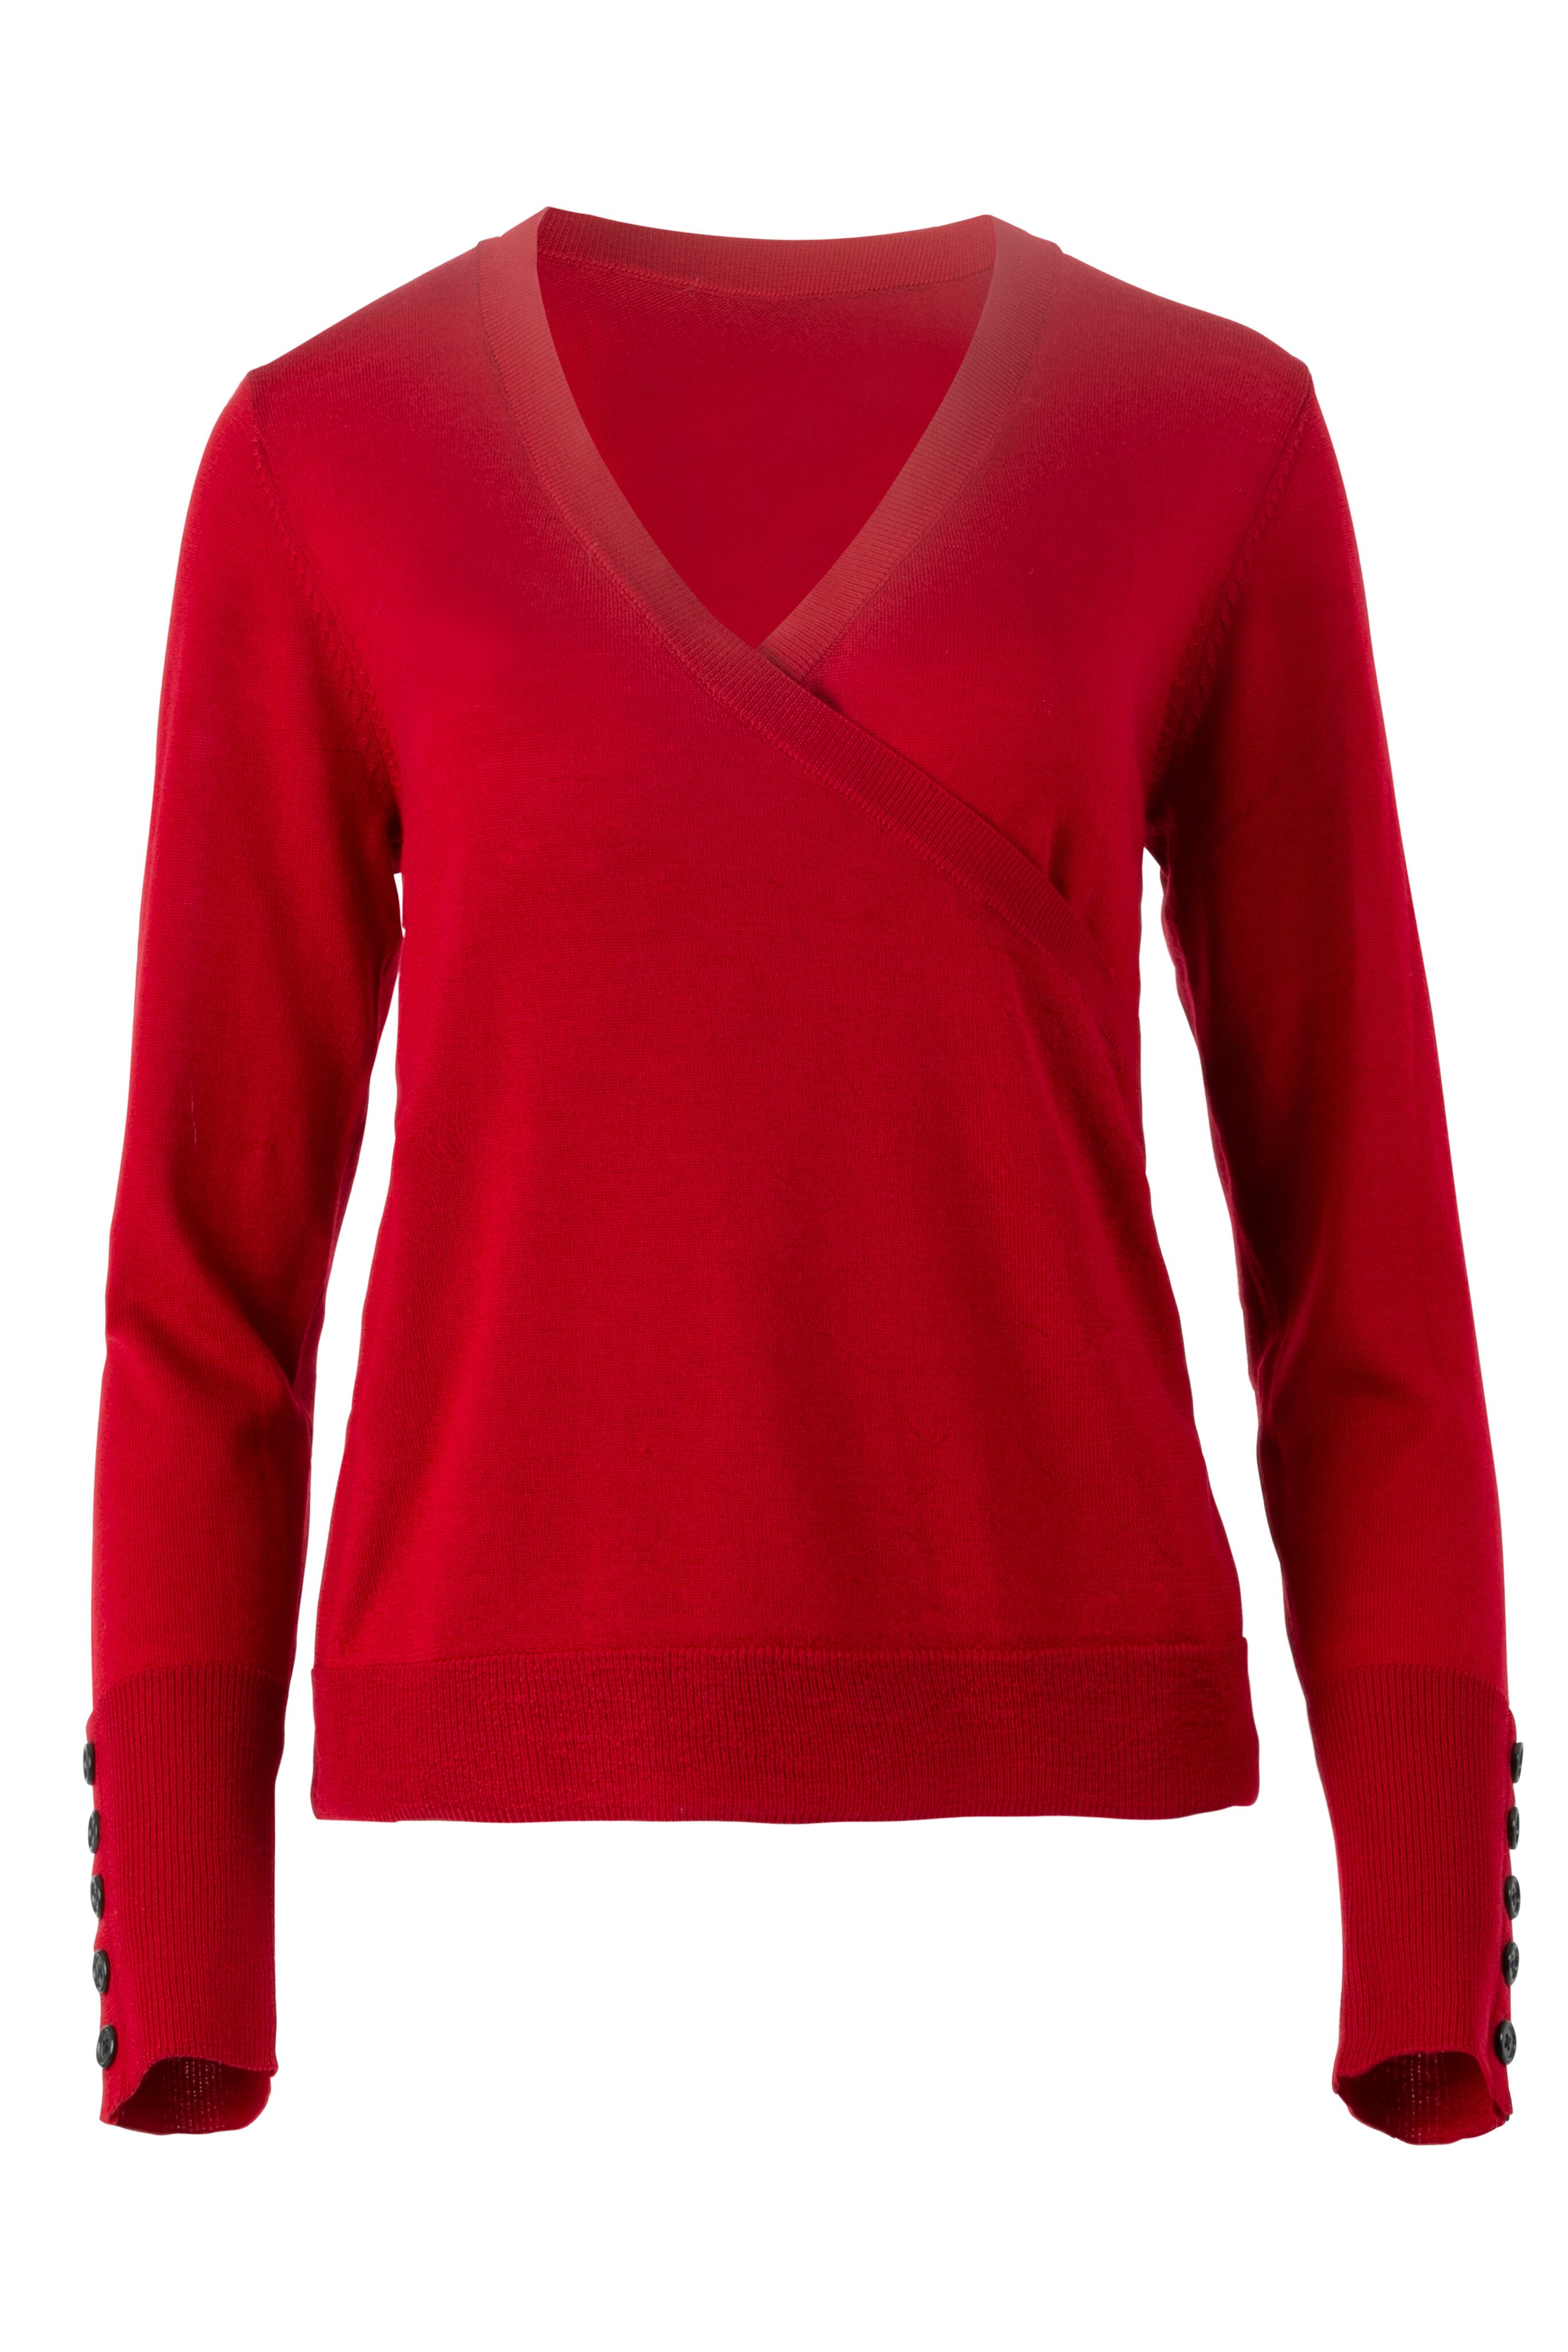 Verge Courage Sweater - Brand-Verge : Diahann Boutique - Verge W20